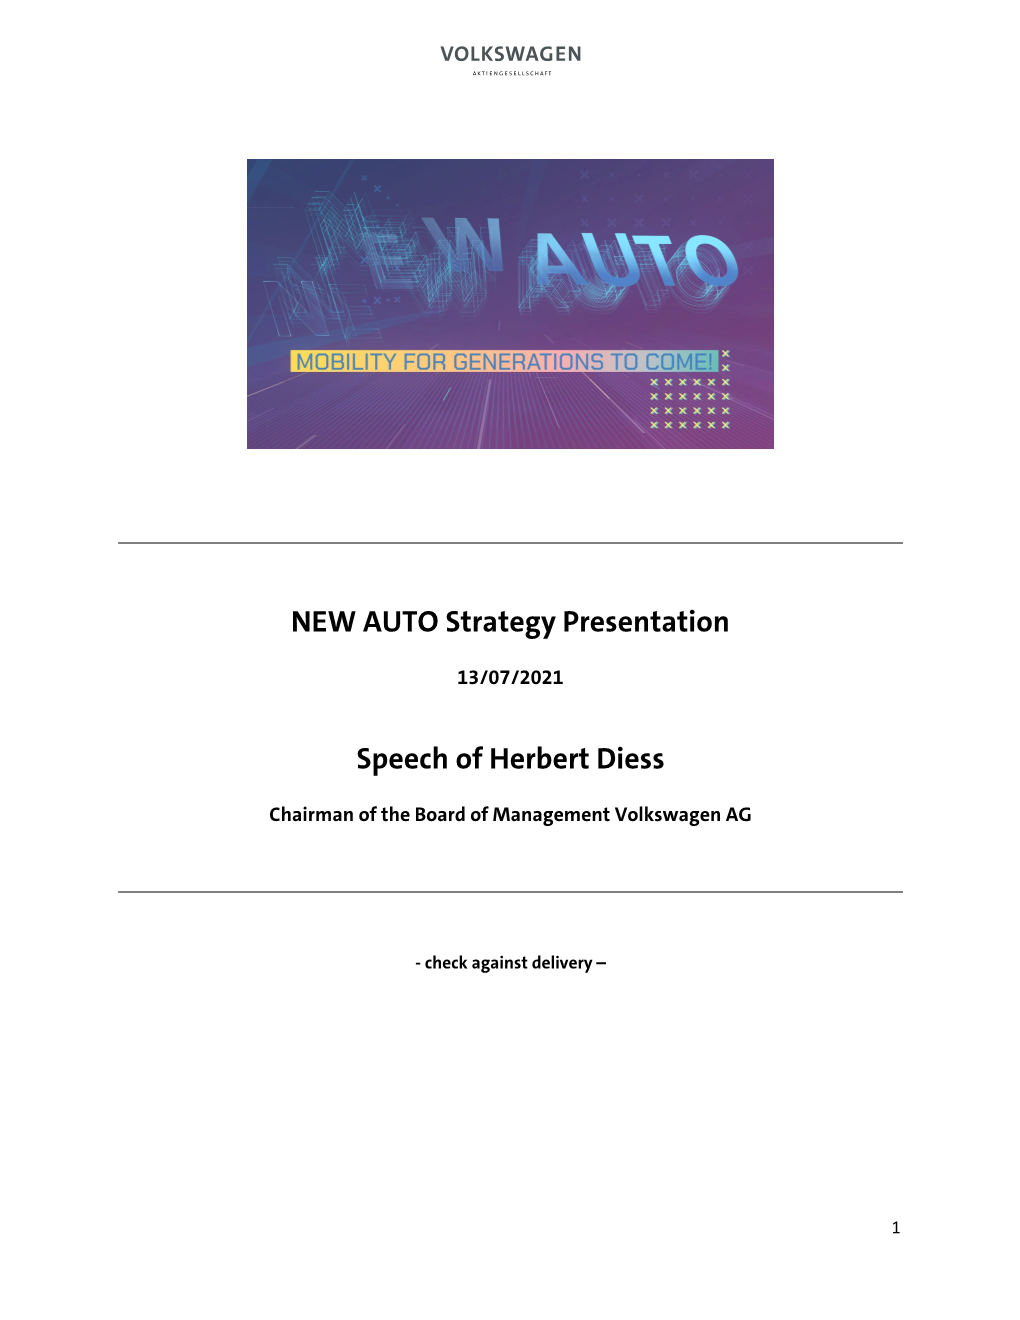 NEW AUTO Strategy Presentation Speech of Herbert Diess